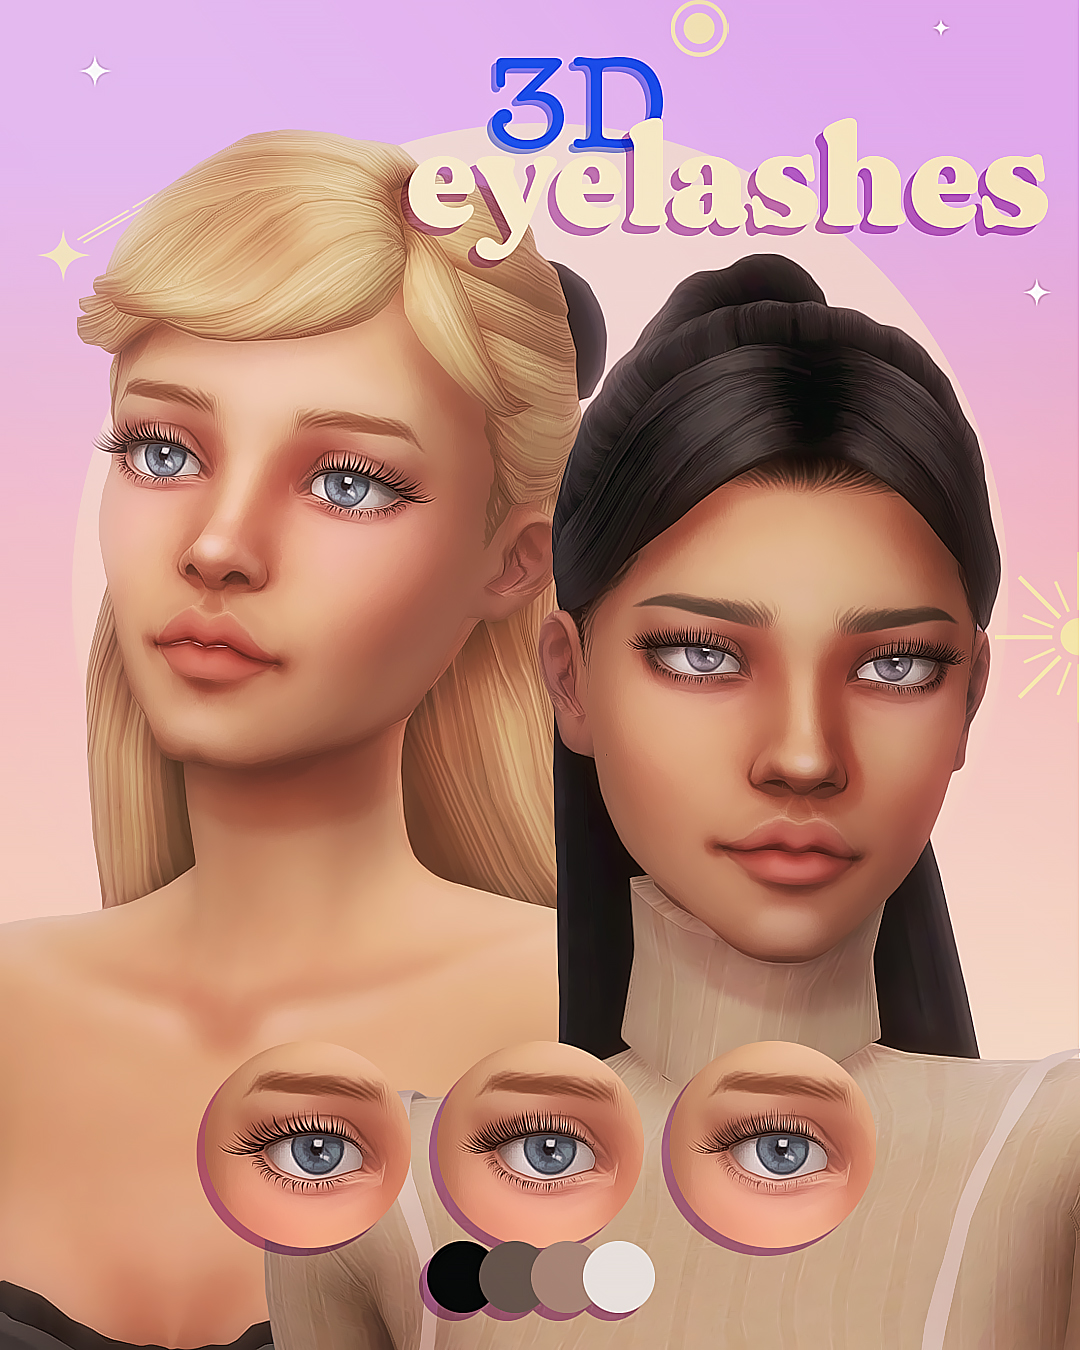 kompliceret Kaptajn brie Give Eyelashes ~ Part 1, 2 and 3 - The Sims 4 Create a Sim - CurseForge